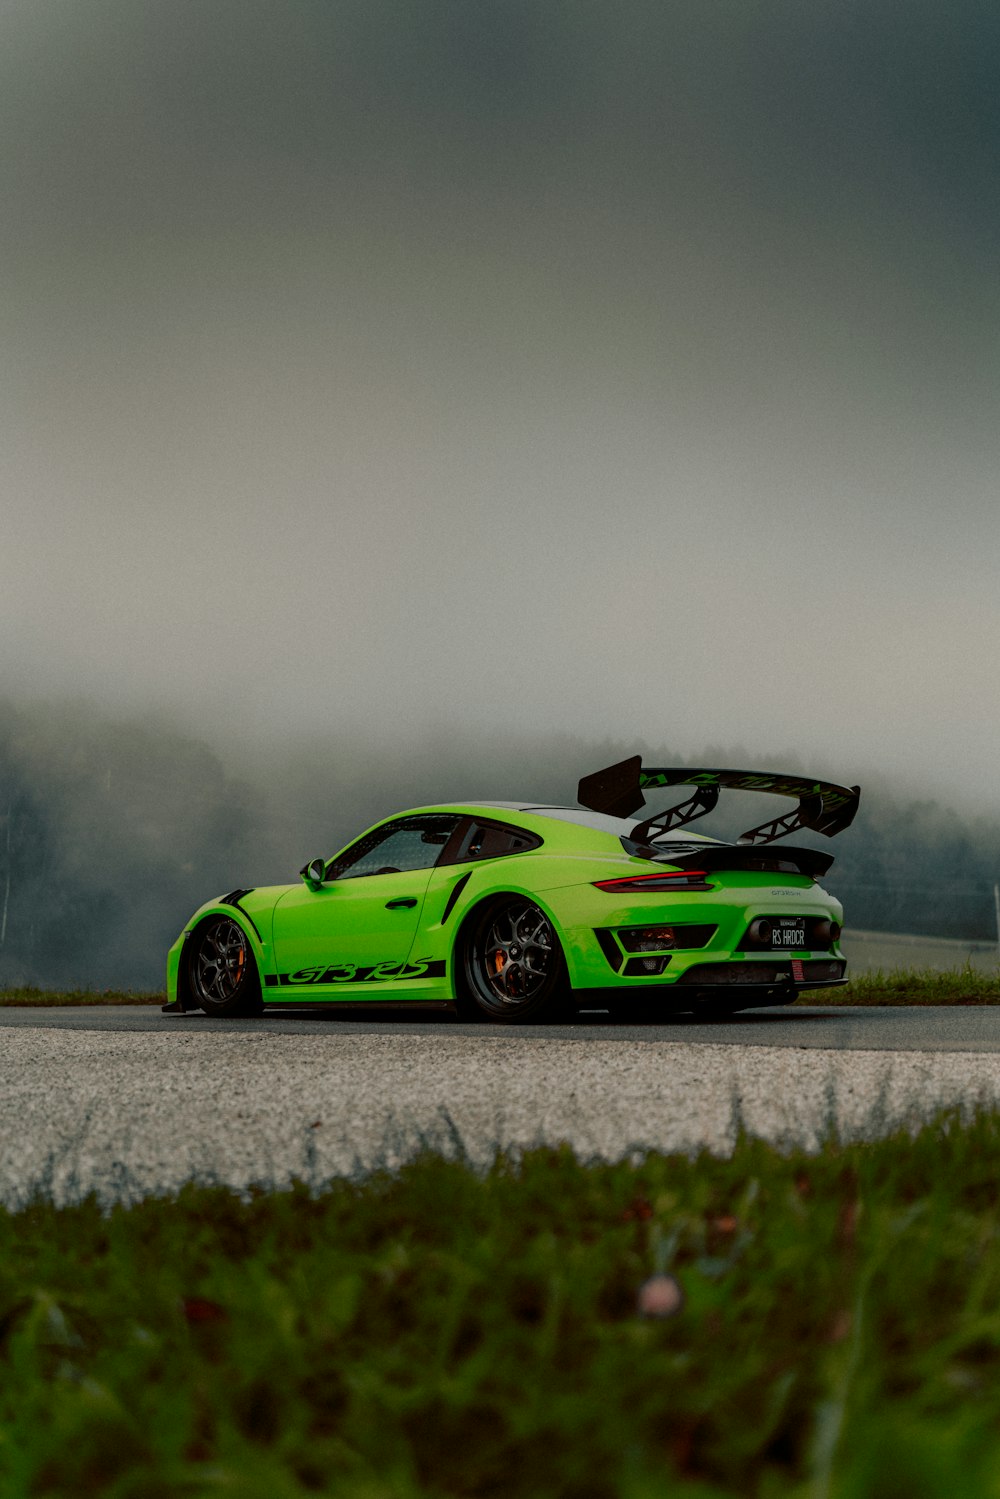 a green sports car driving down a road